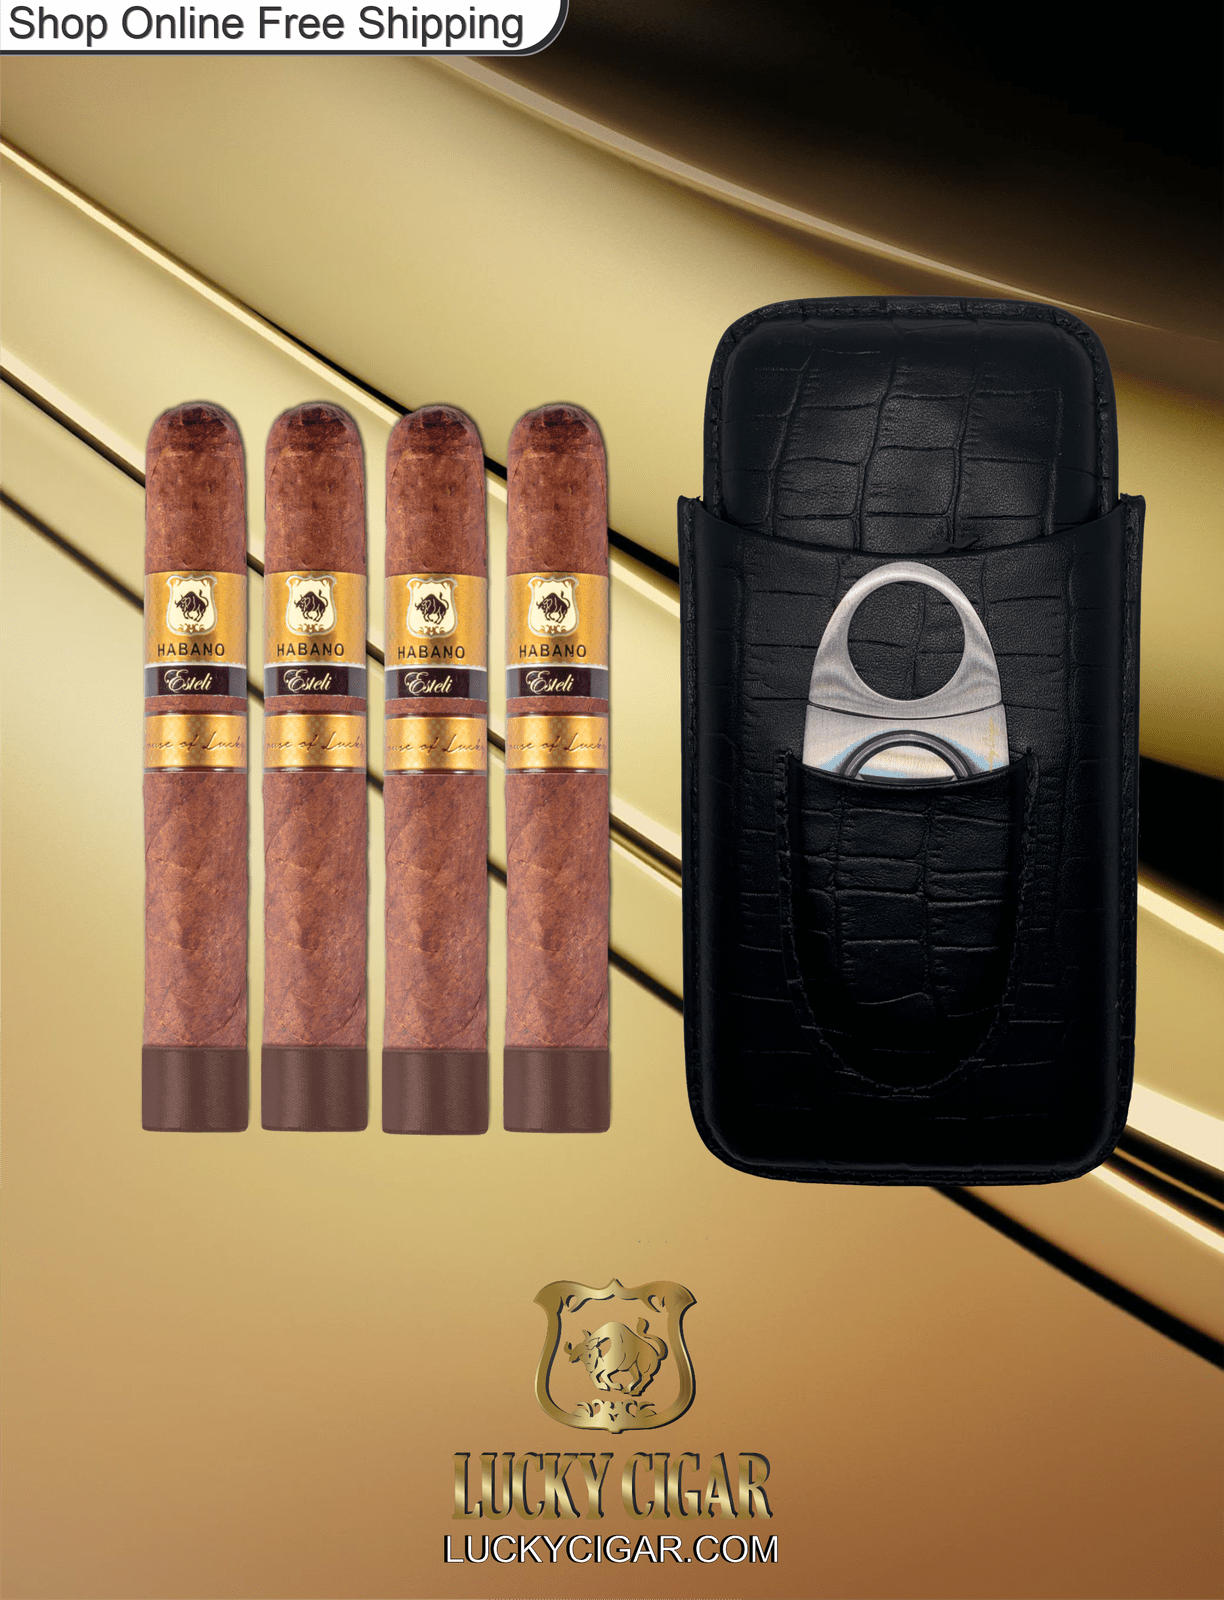 Lucky Cigar Sampler Sets: Set of 3 Habano Esteli Toro 6x50 Cigars with Travel Humidor Case, Cutter